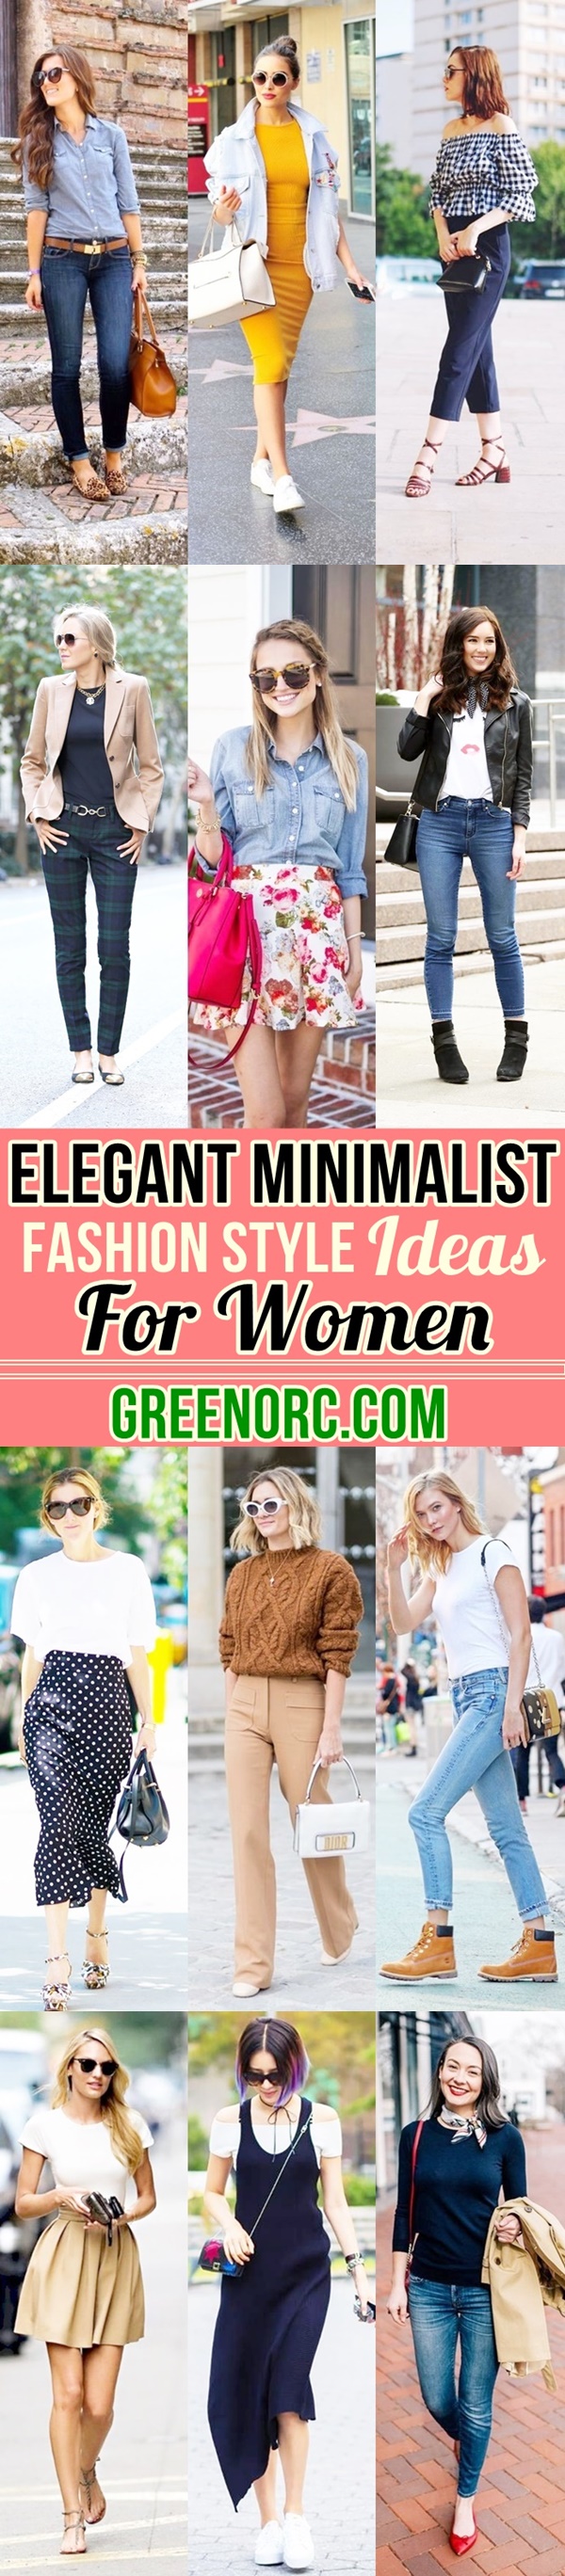 Elegant Minimalist Fashion Style Ideas For Women